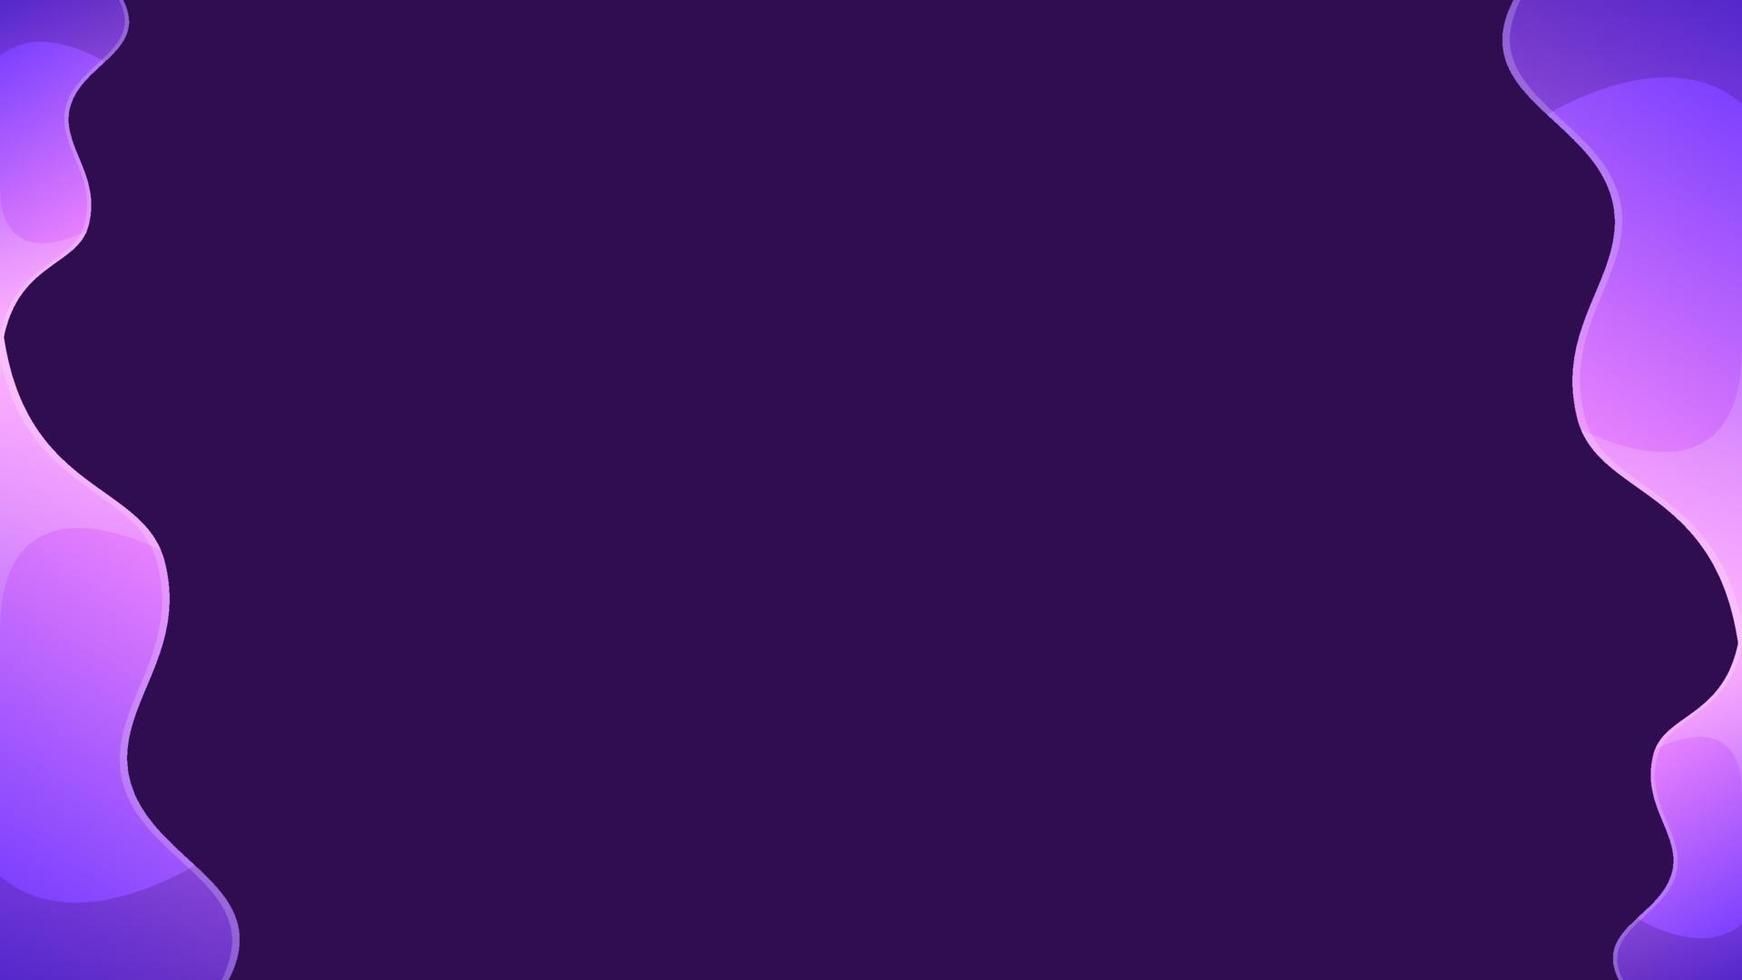 modern background with purple gradient vector